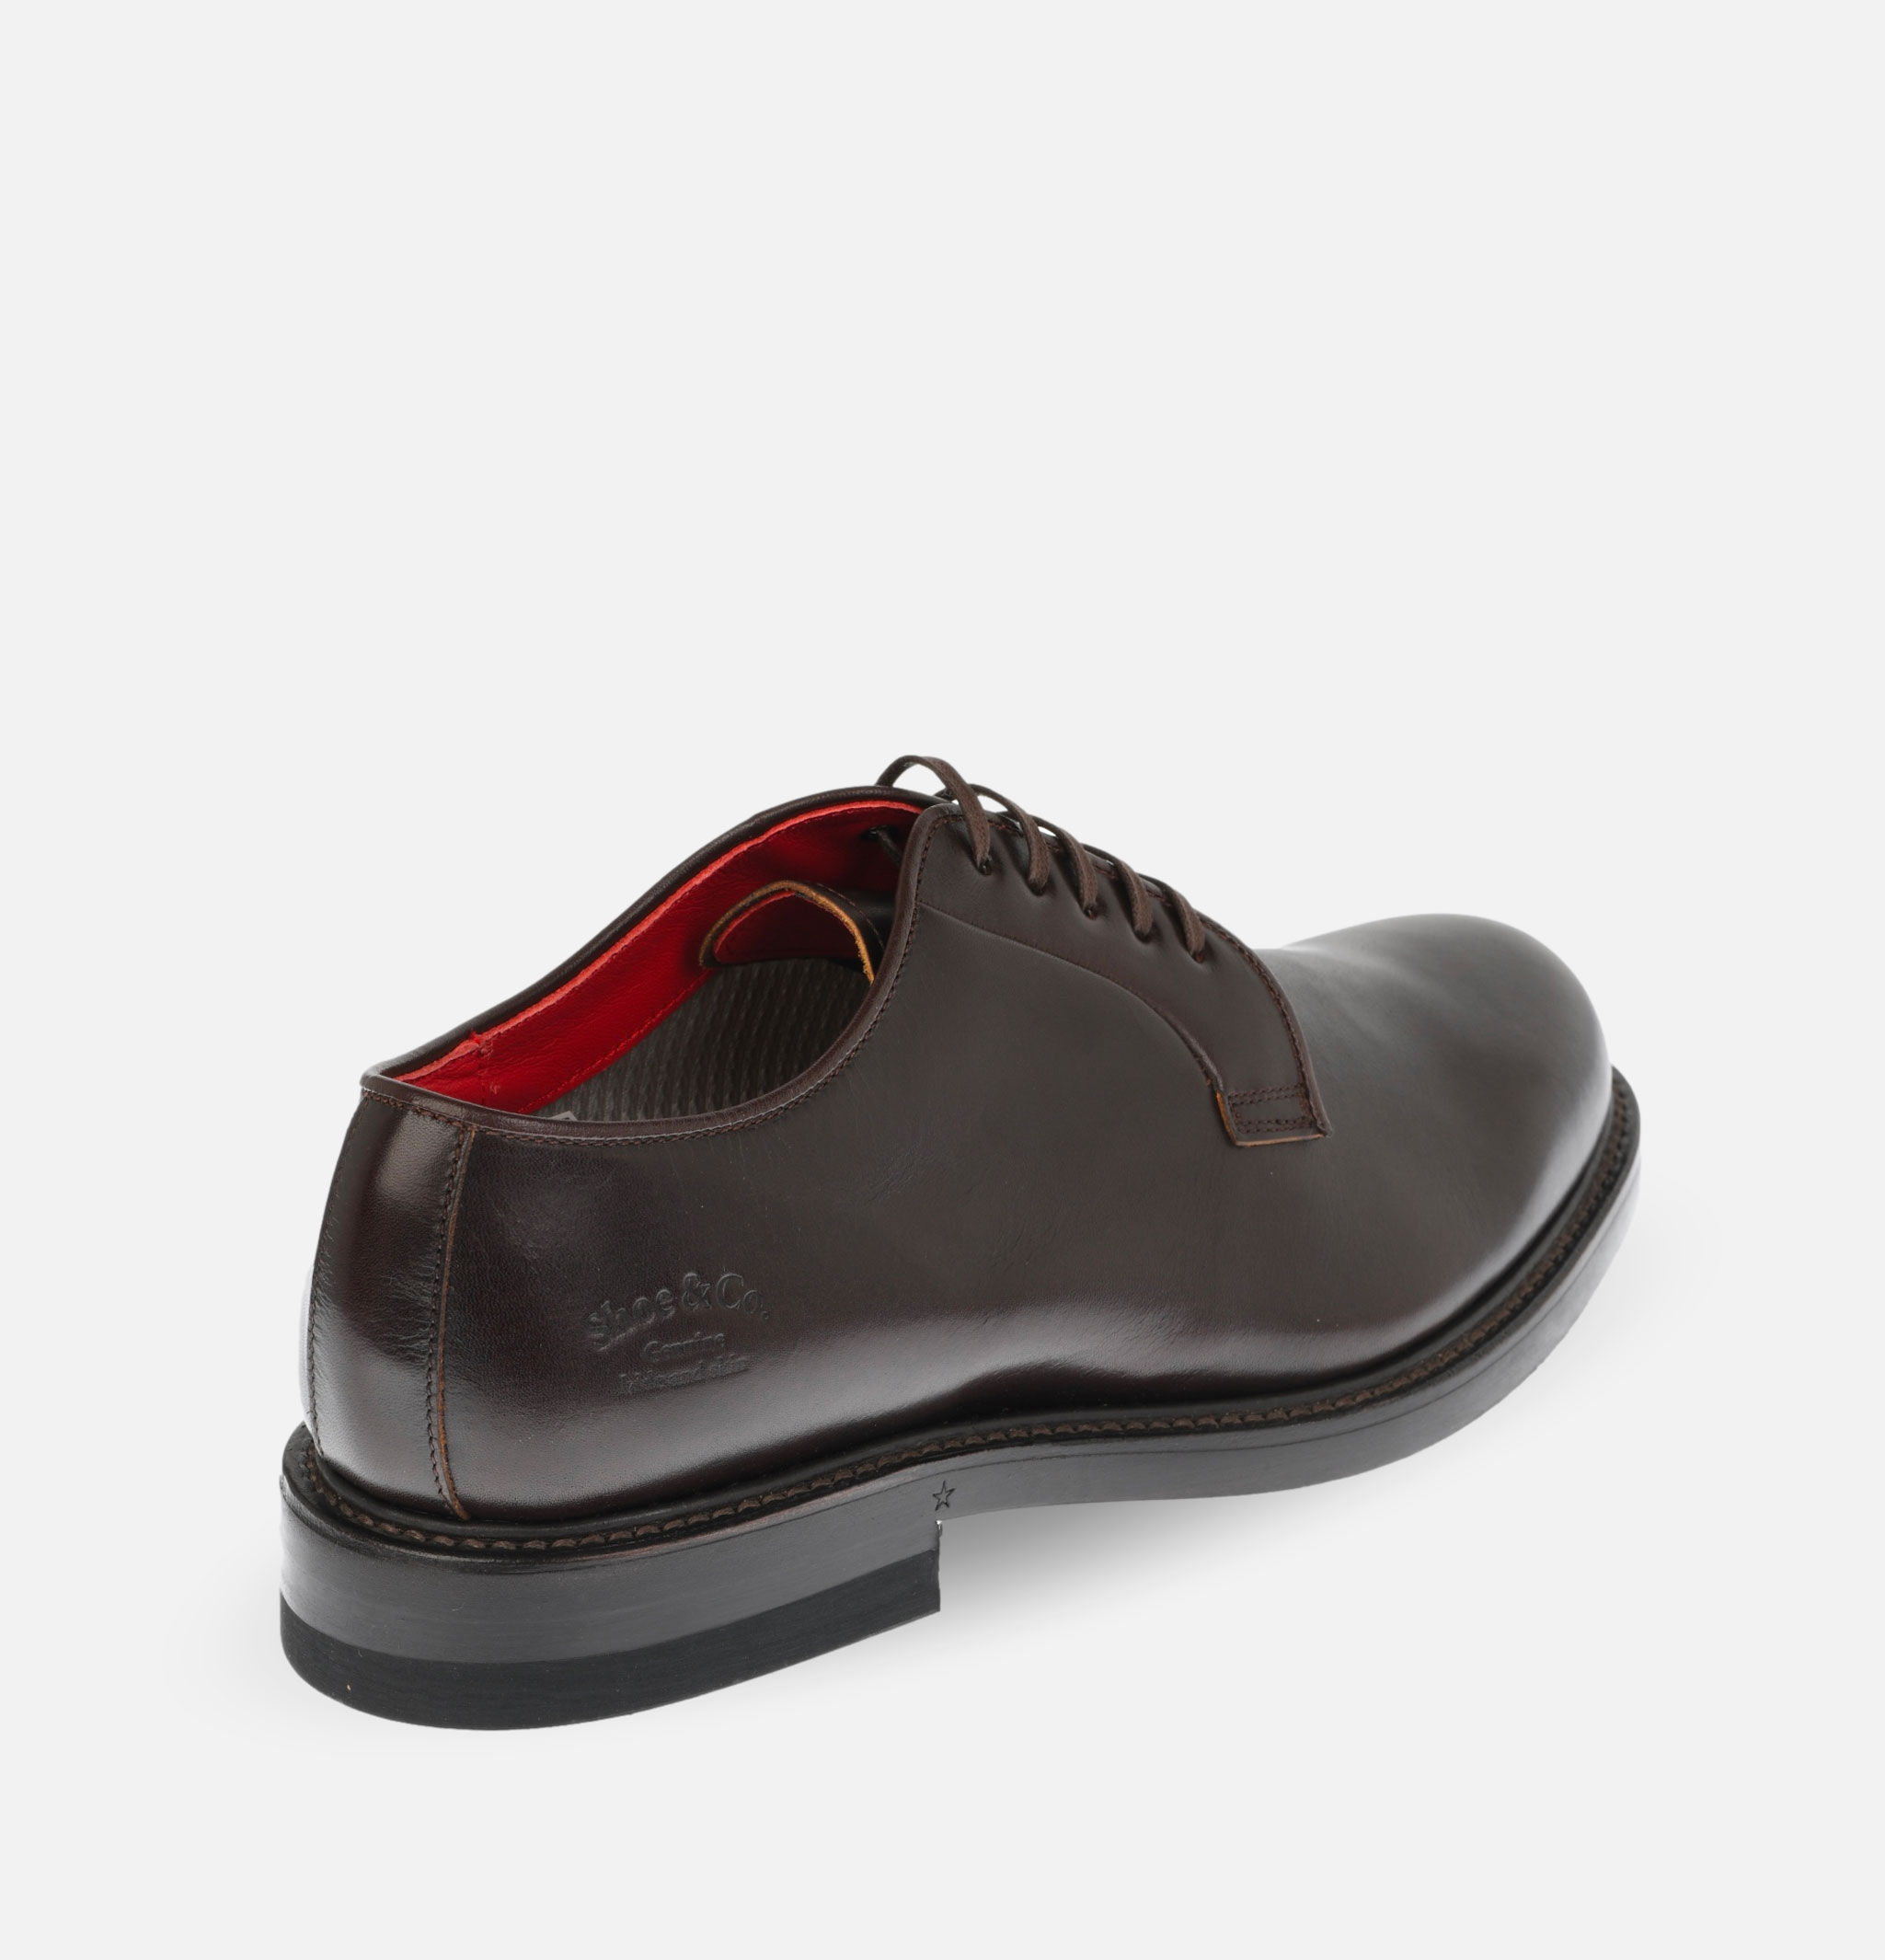 Chaussures Regal Shoe & Co Plain-toe Brown Gore-tex